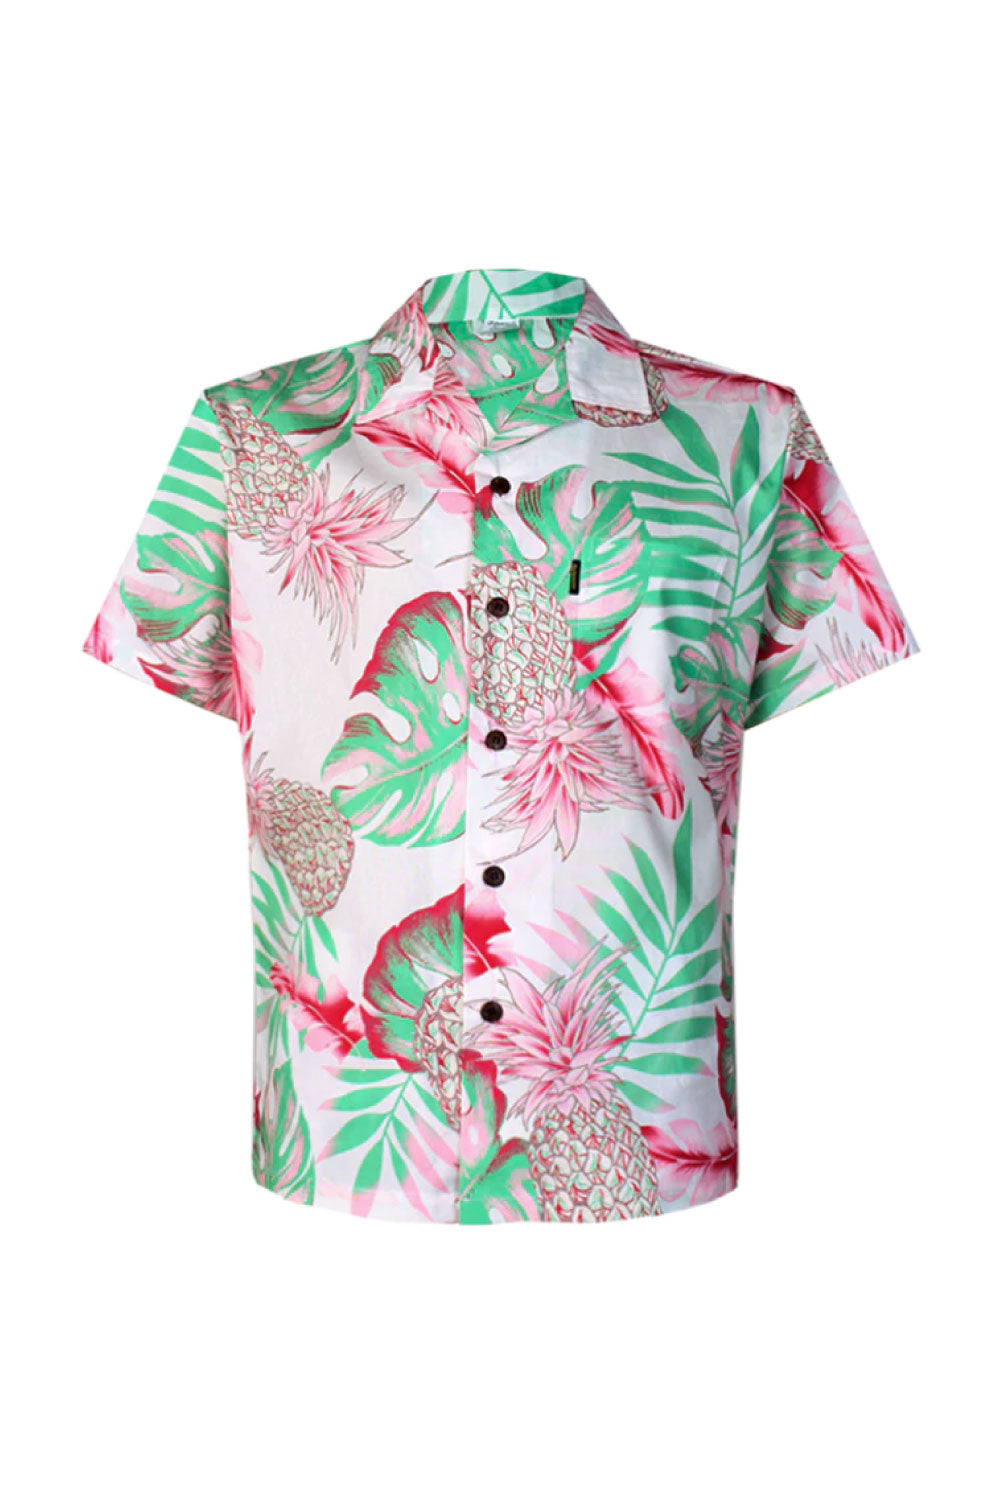 Image of the front of Palmwave's Pastel Pink Leaf Aloha Men's Shirt.